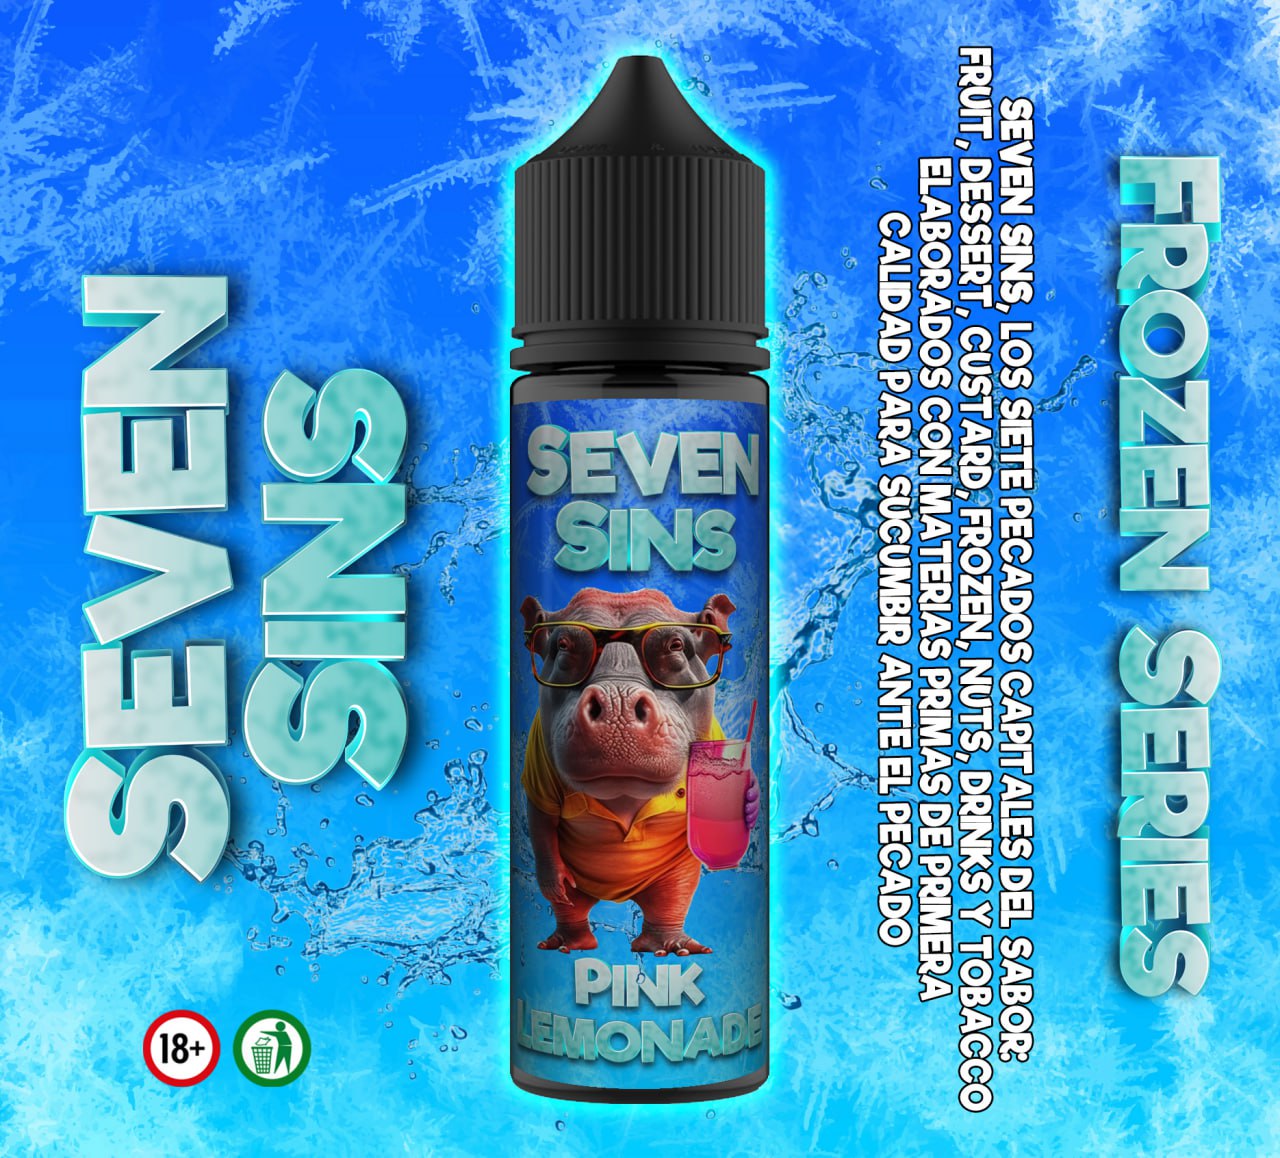 Seven Sins E liquid